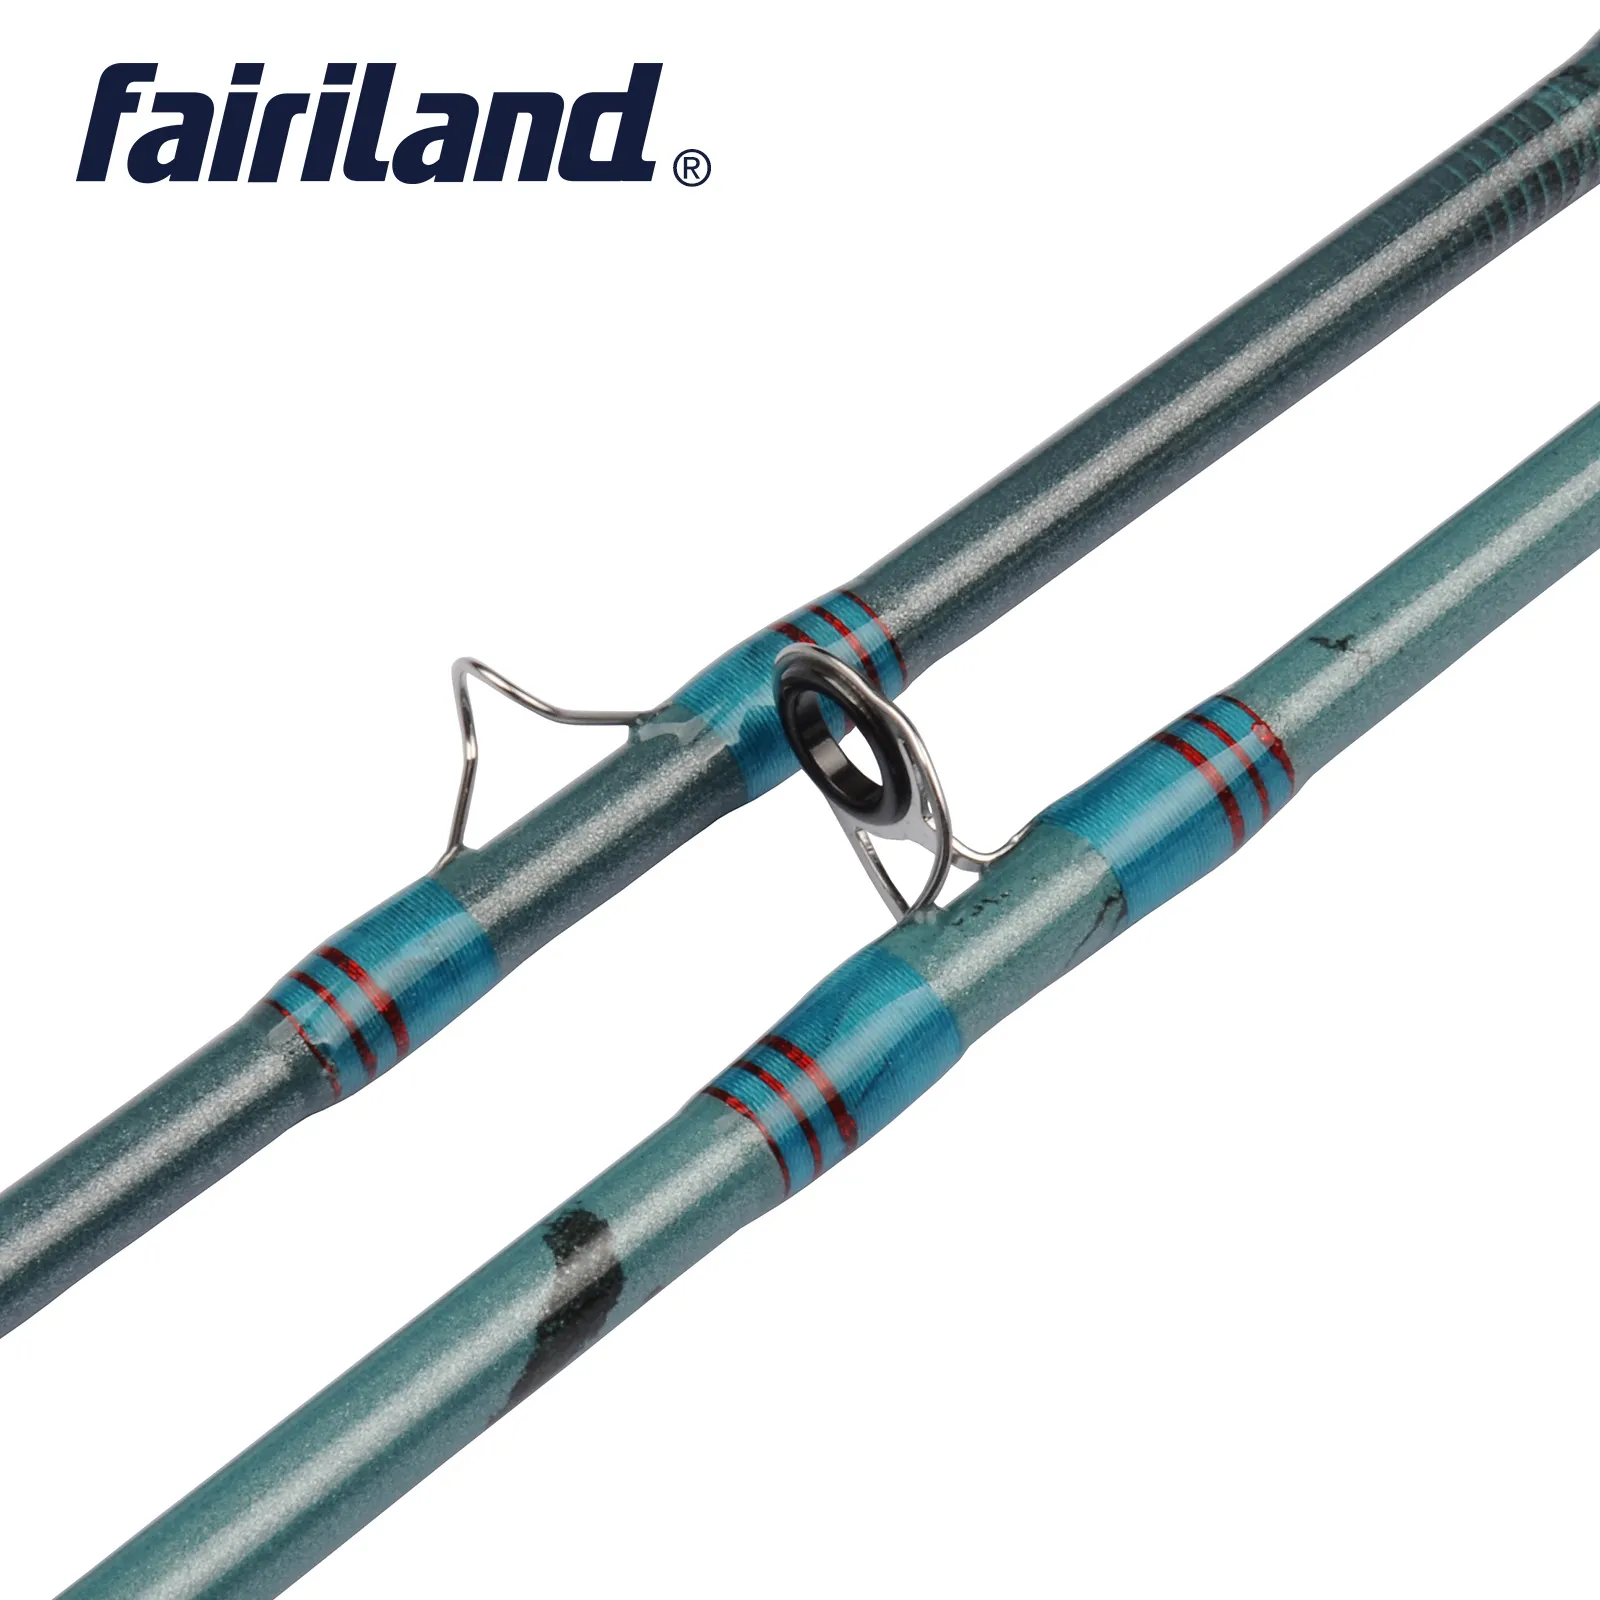 Fairiland Fly Fishing Rod 9ft 2 7m 4 섹션 추가 상단 끝 팁 섹션 낚싯대 3 4# Fly Fishing Carbon Rod Saldwater Fre334e